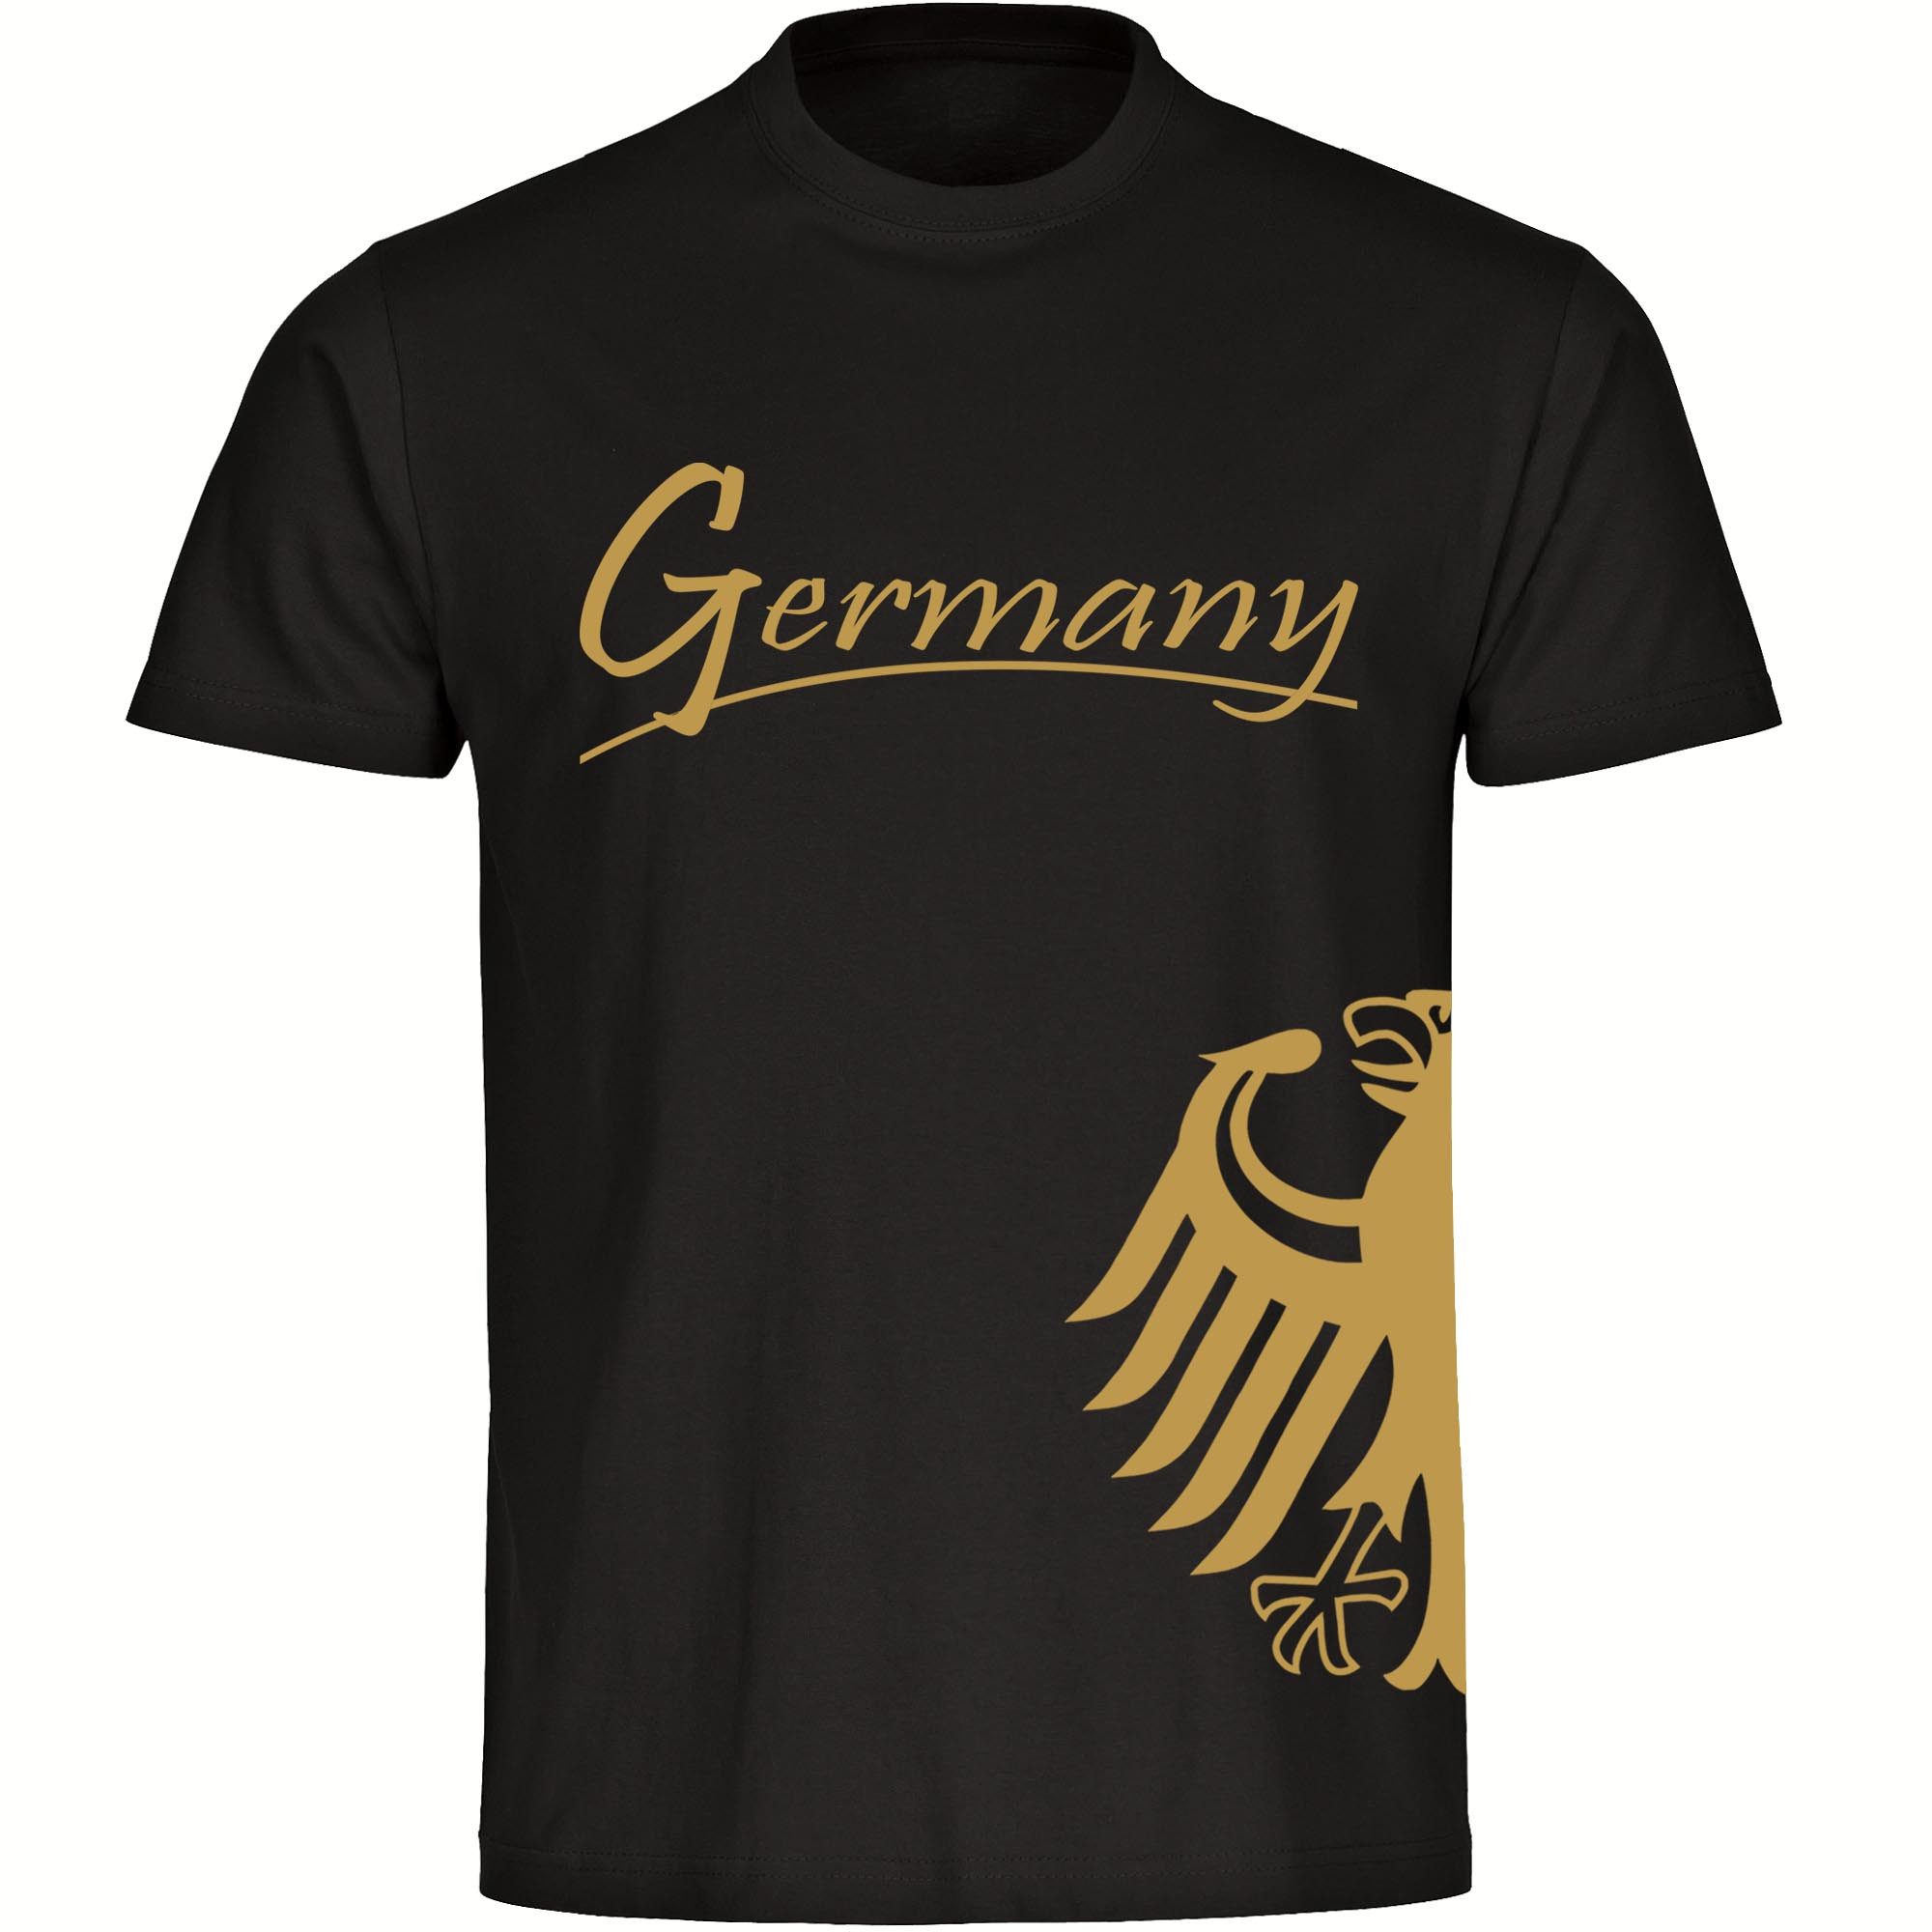 multifanshop T-Shirt Kinder Germany - Adler seitlich Gold - Boy Girl